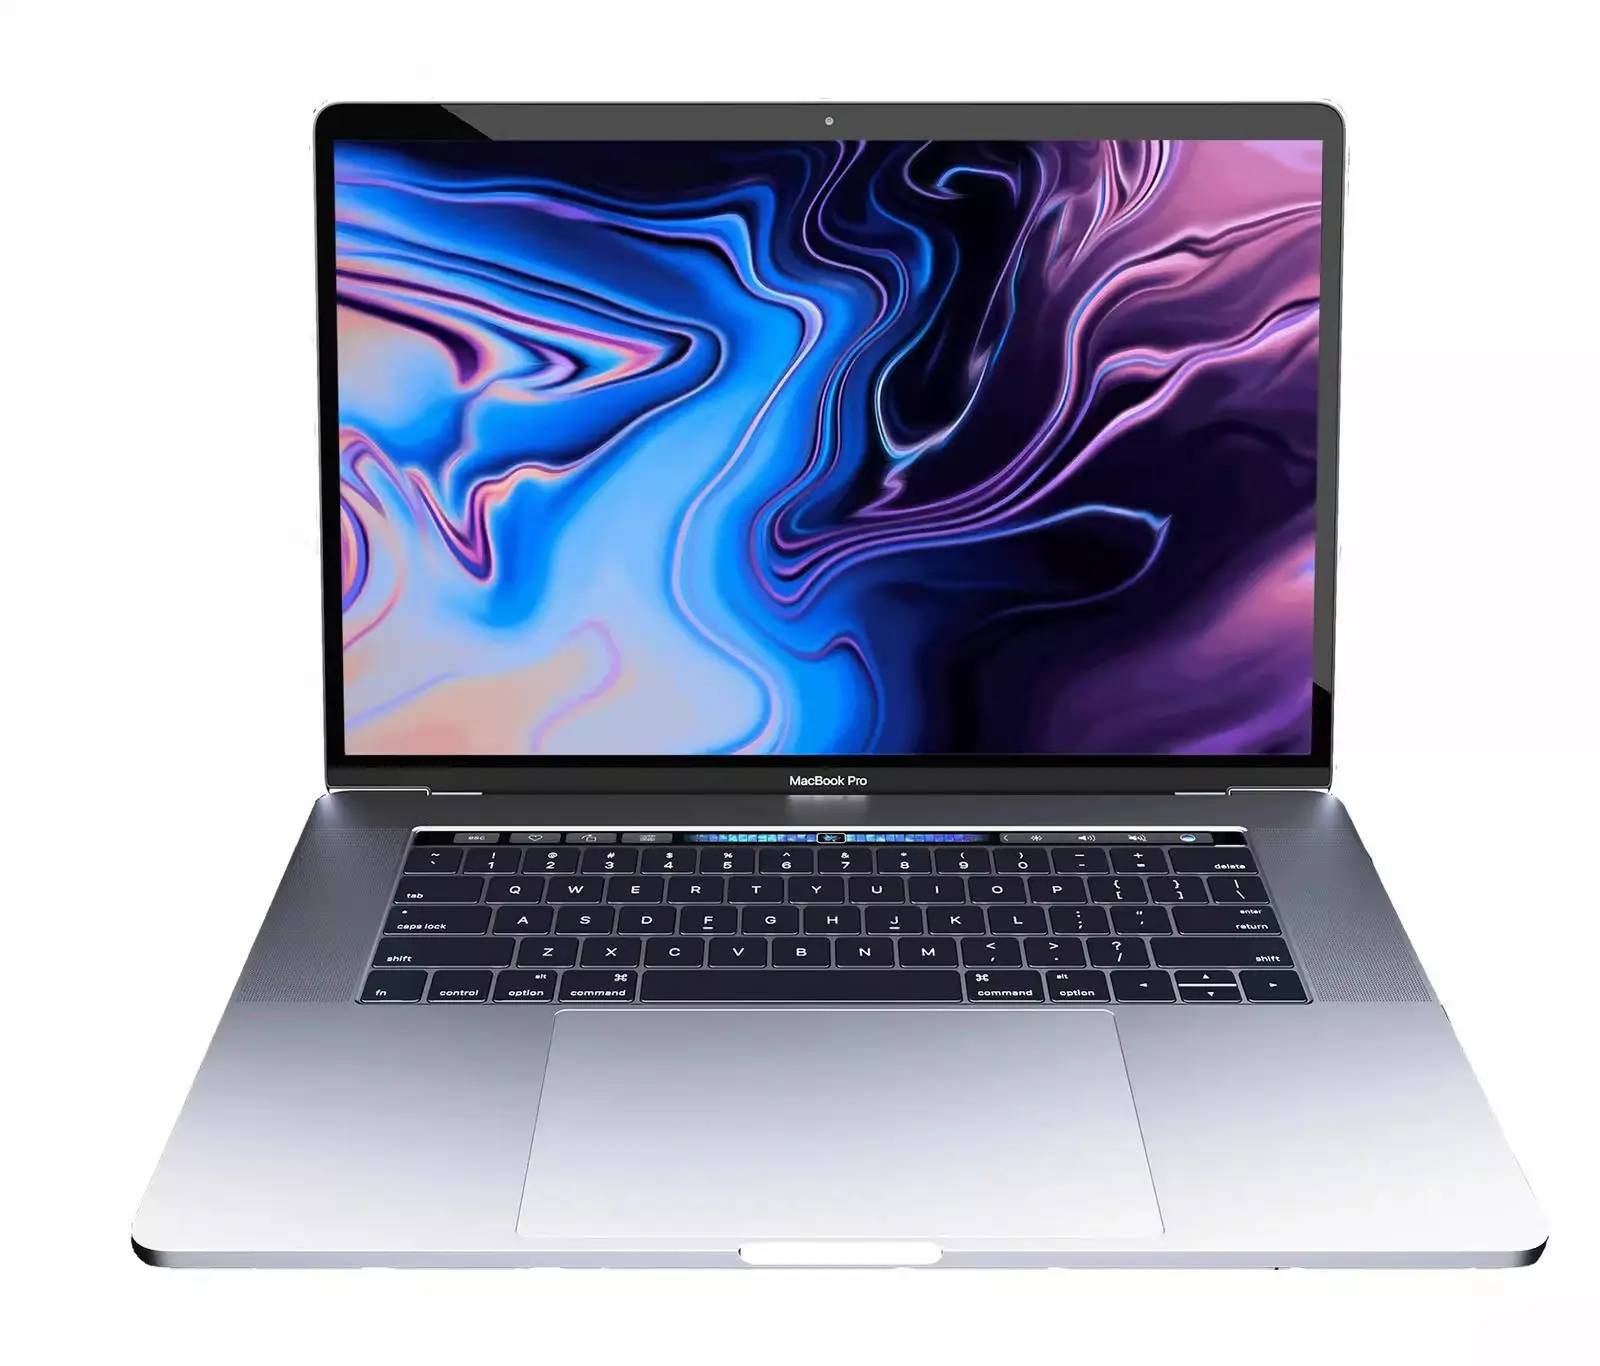 Laptop A1990 2018 usado, notebook Apple barato, macbook Pro, Apple-laptop